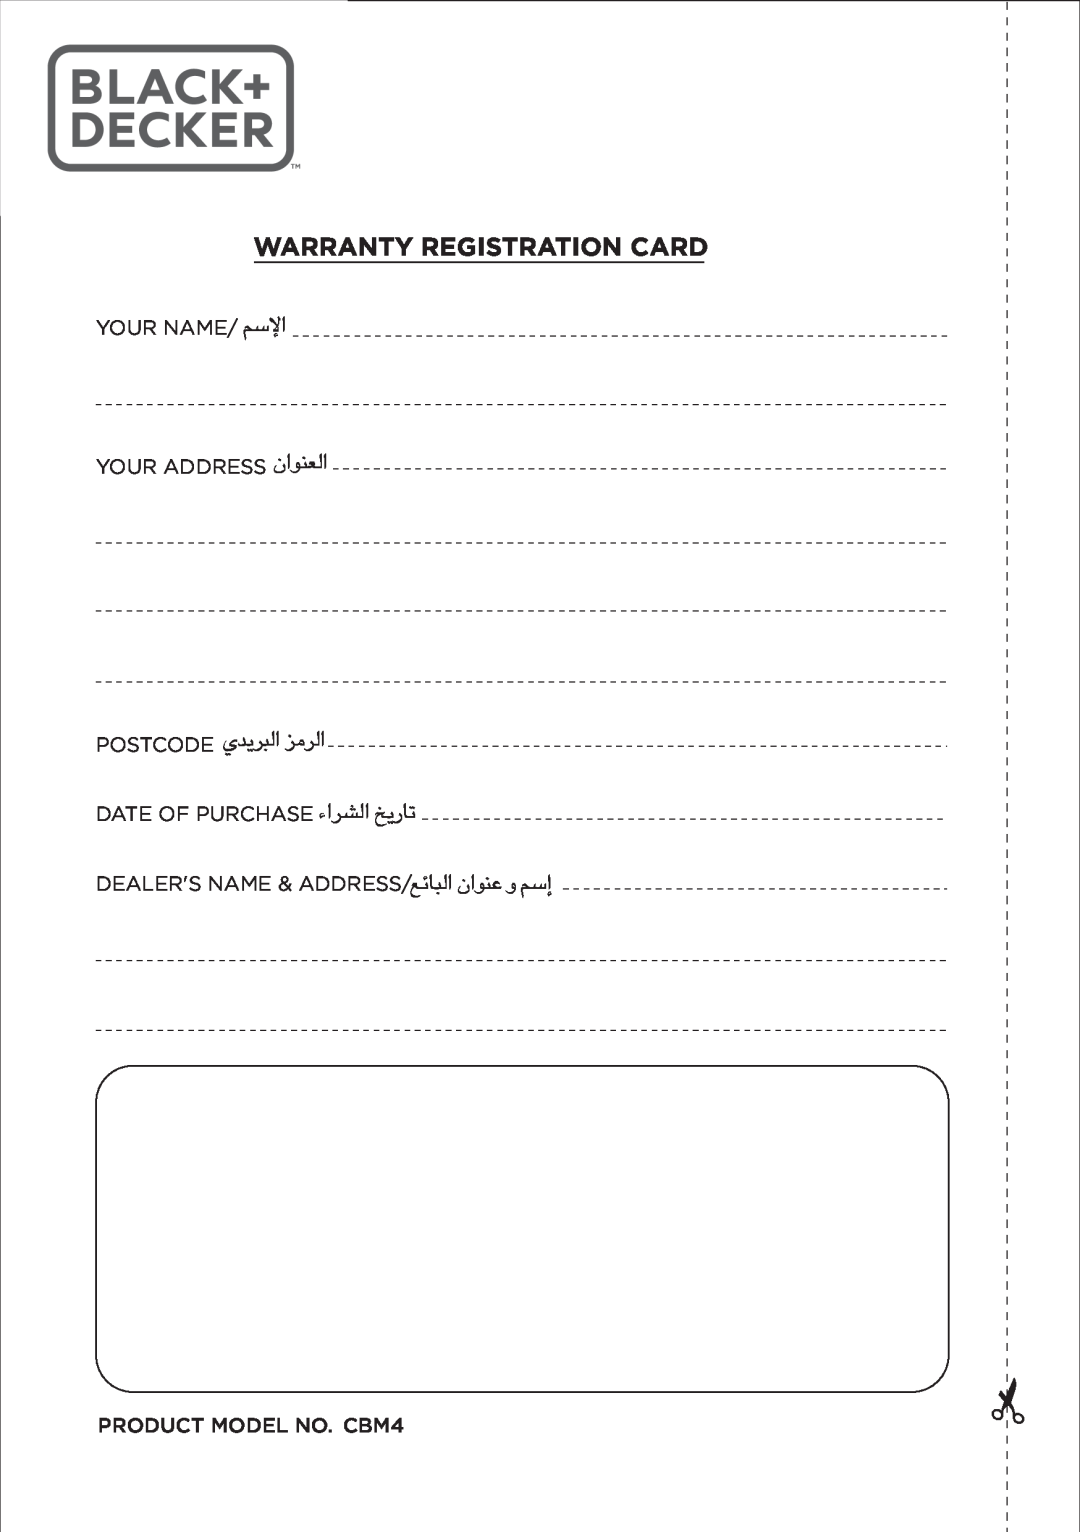 Black & Decker CBM4 manual Warranty Registration Card, «ùßr, «∞FMu«Ê, «∞∂d¥bÍ «∞d±e, «∞Ad«¡ ¢U¸¥a, «∞∂Uzl ´Mu«Ê Ë ≈ßr 